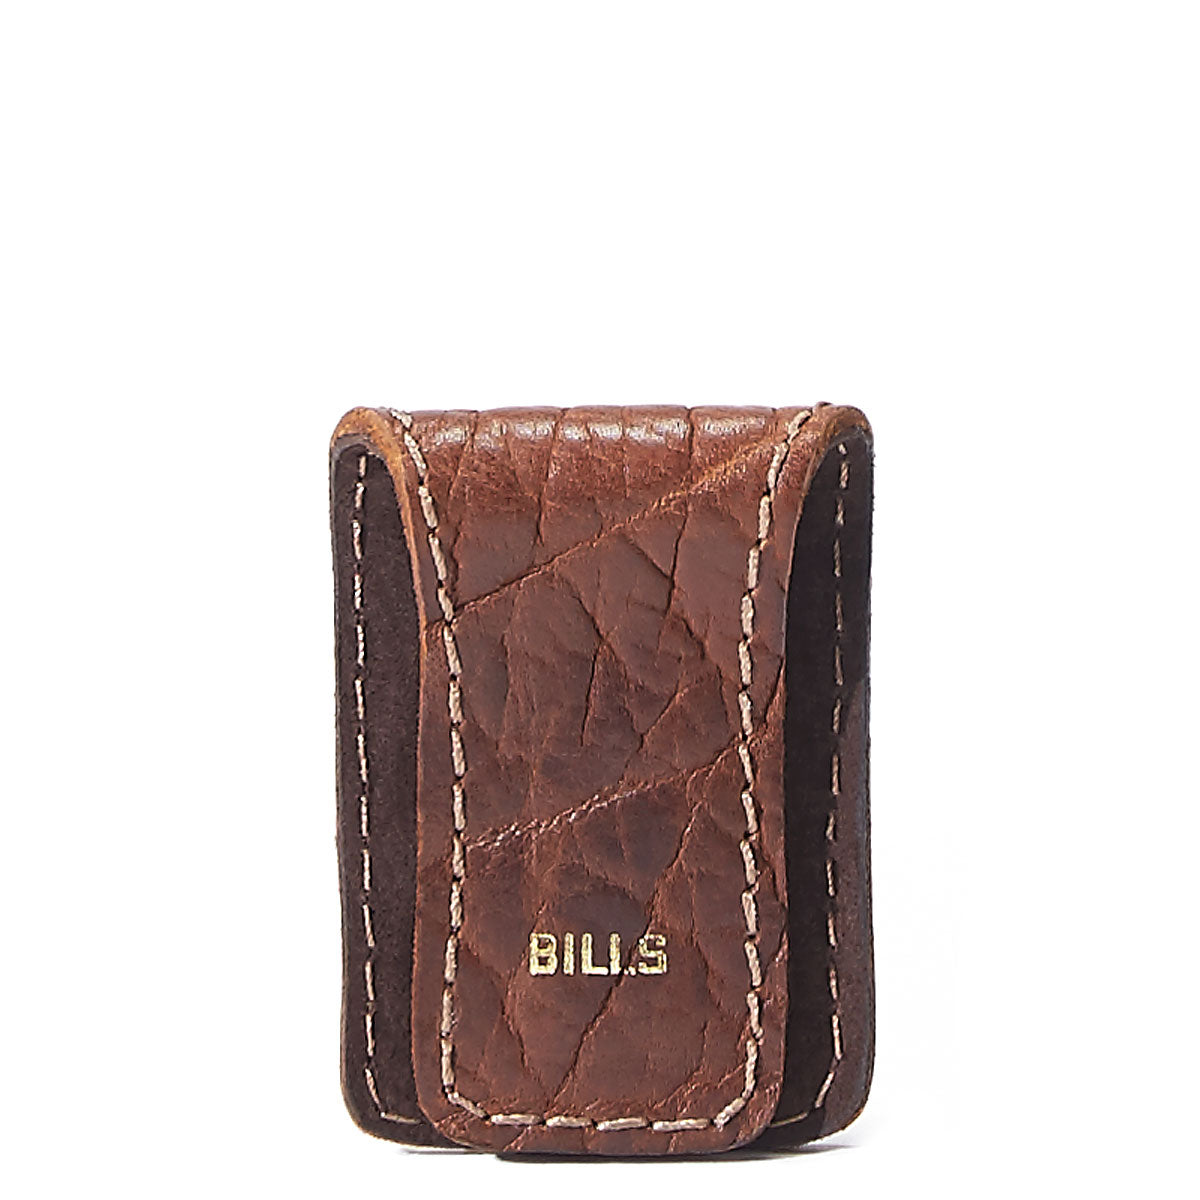 Bison Money Clip #680 - Coronado Leather